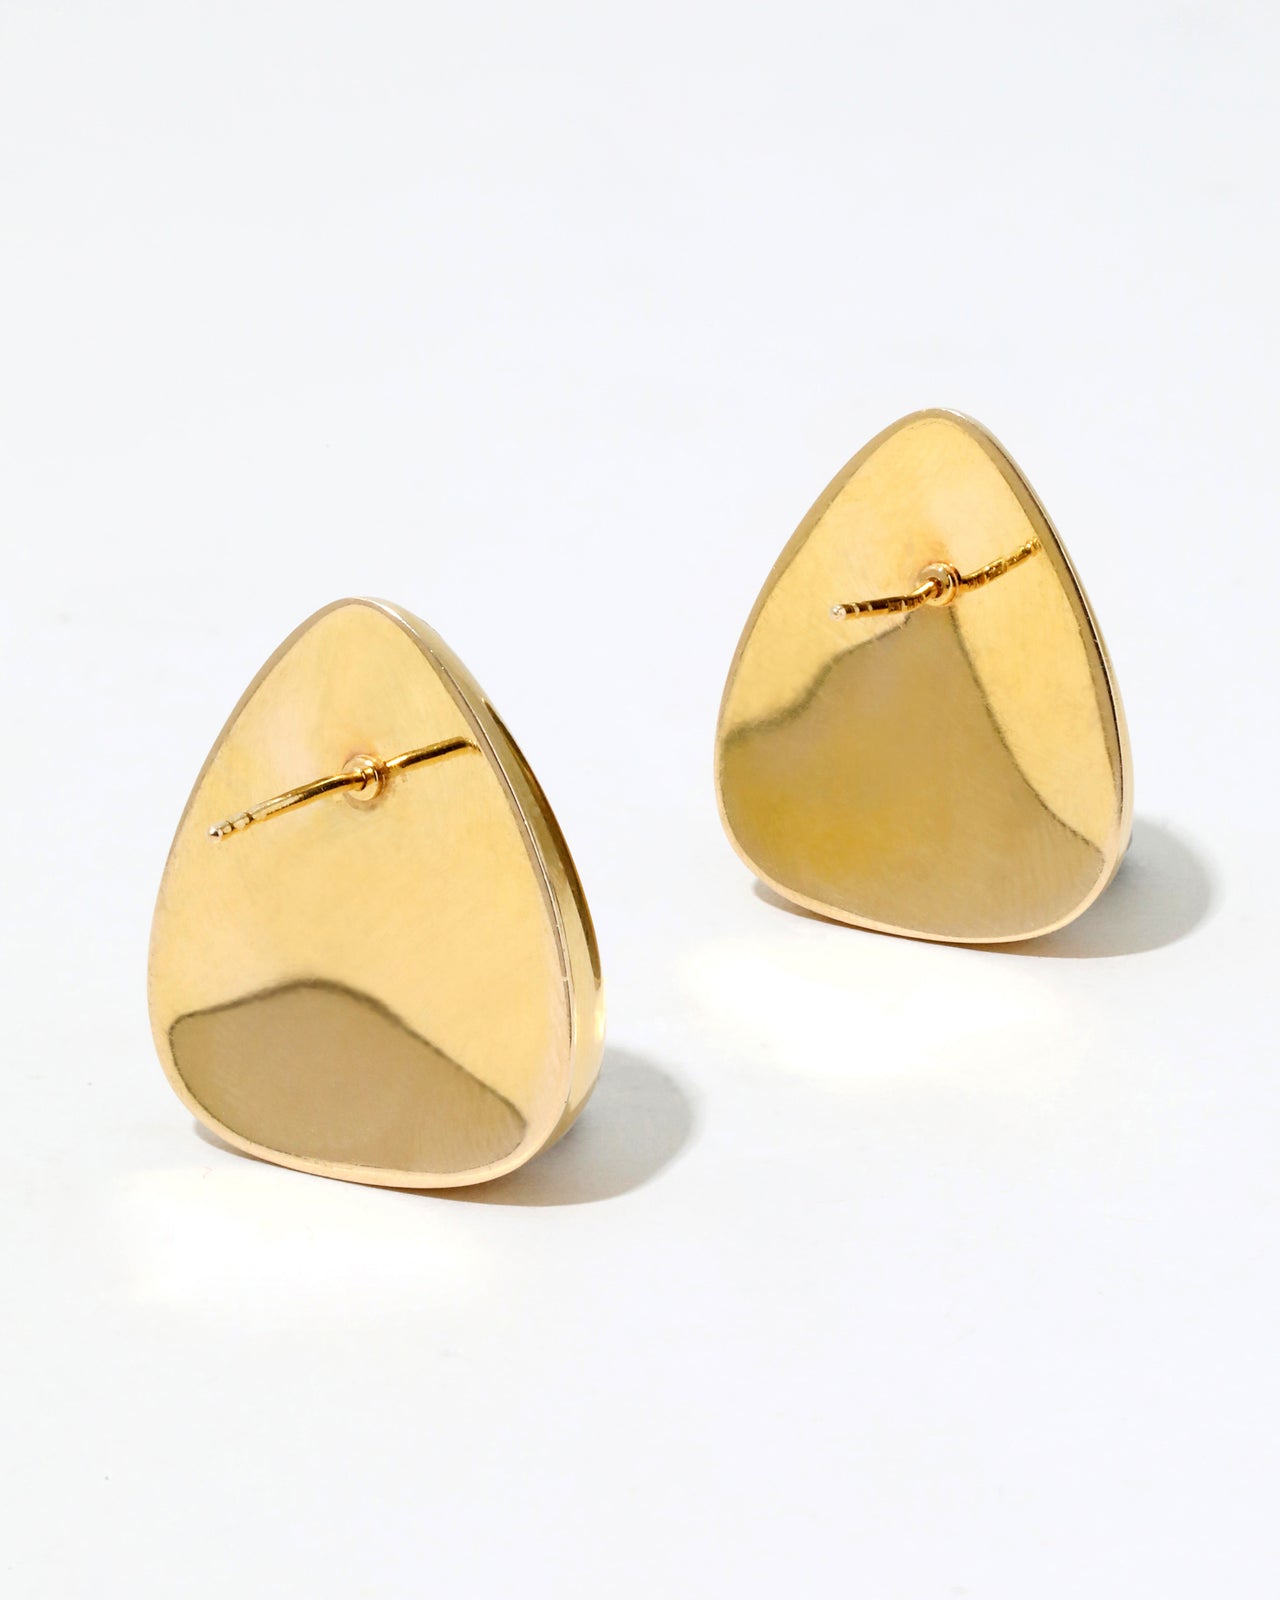 Vintage 14k Gold Organic Triangular Post Earrings - Photo 2